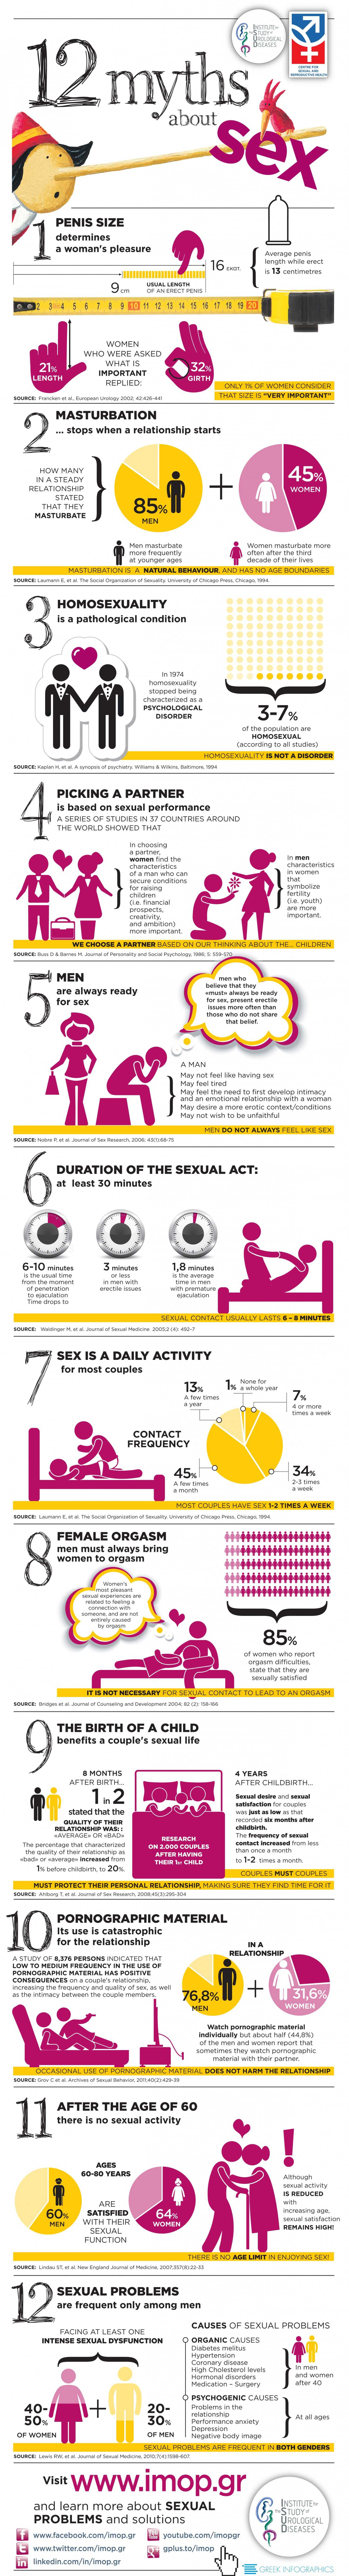 Myths About Sex